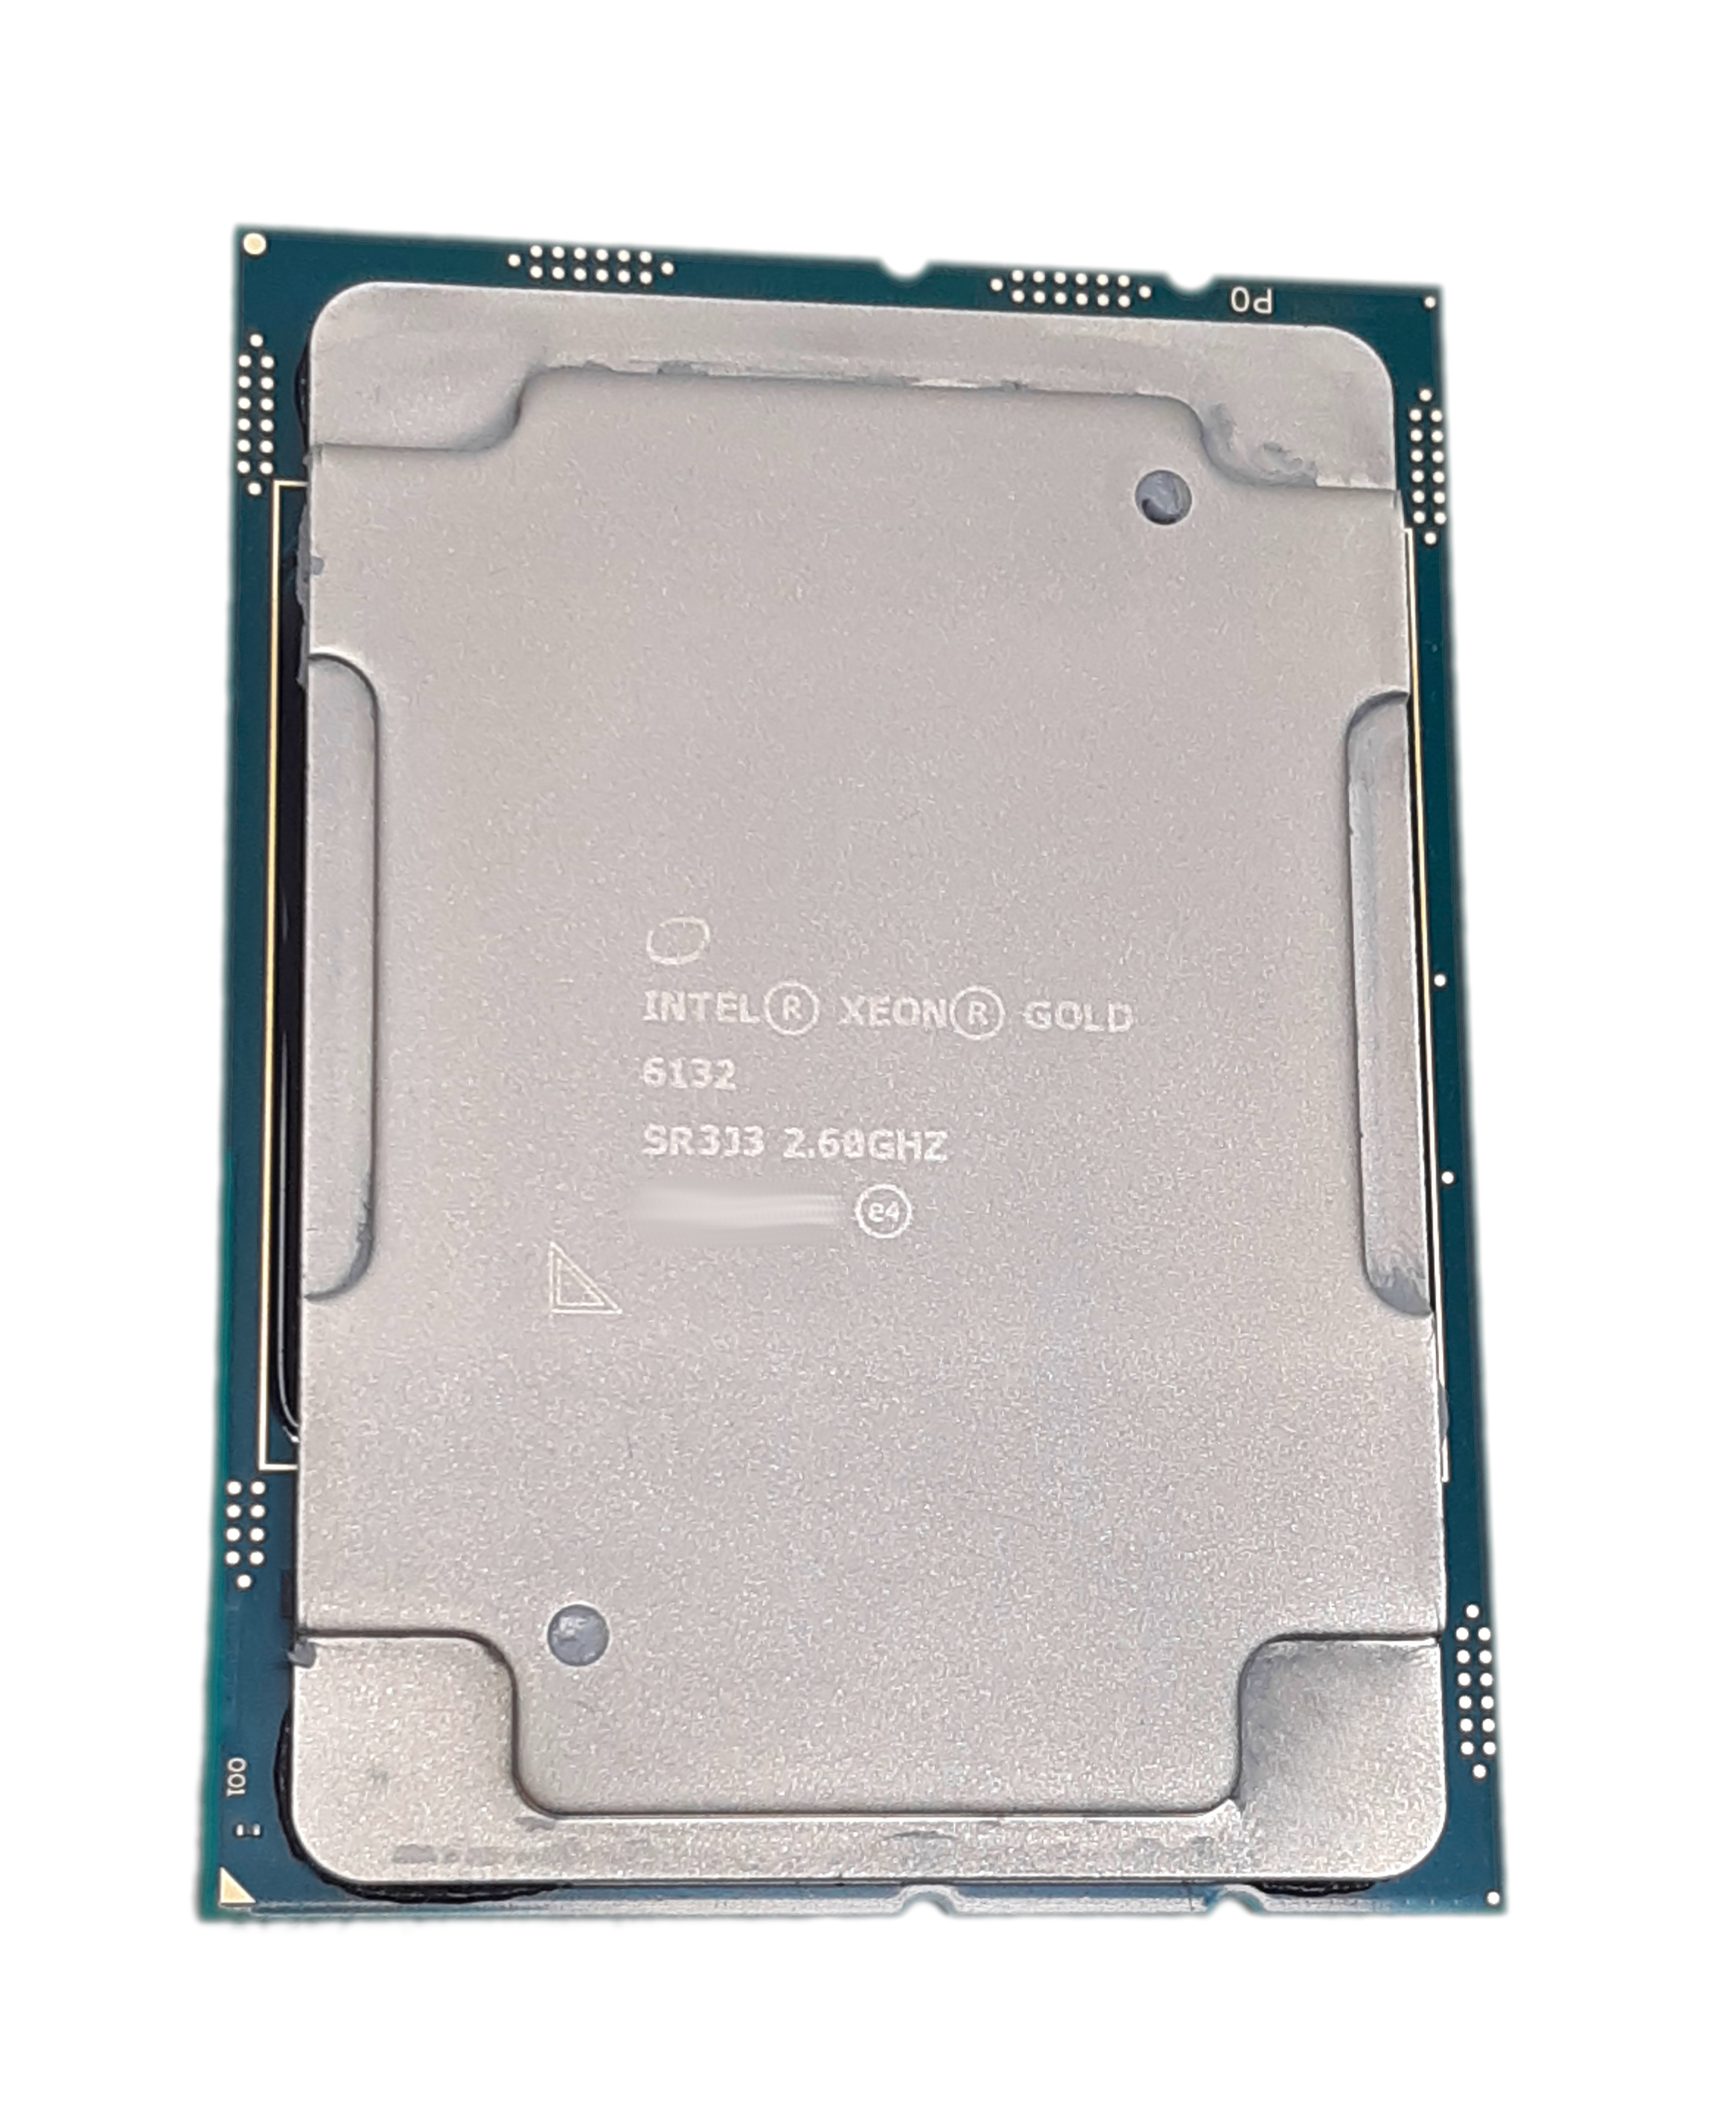 Intel Xeon Gold HPE 6132 2.6GHz 14C/28T Cache 19.25MB Server CPU FCLGA3647 SR3J3